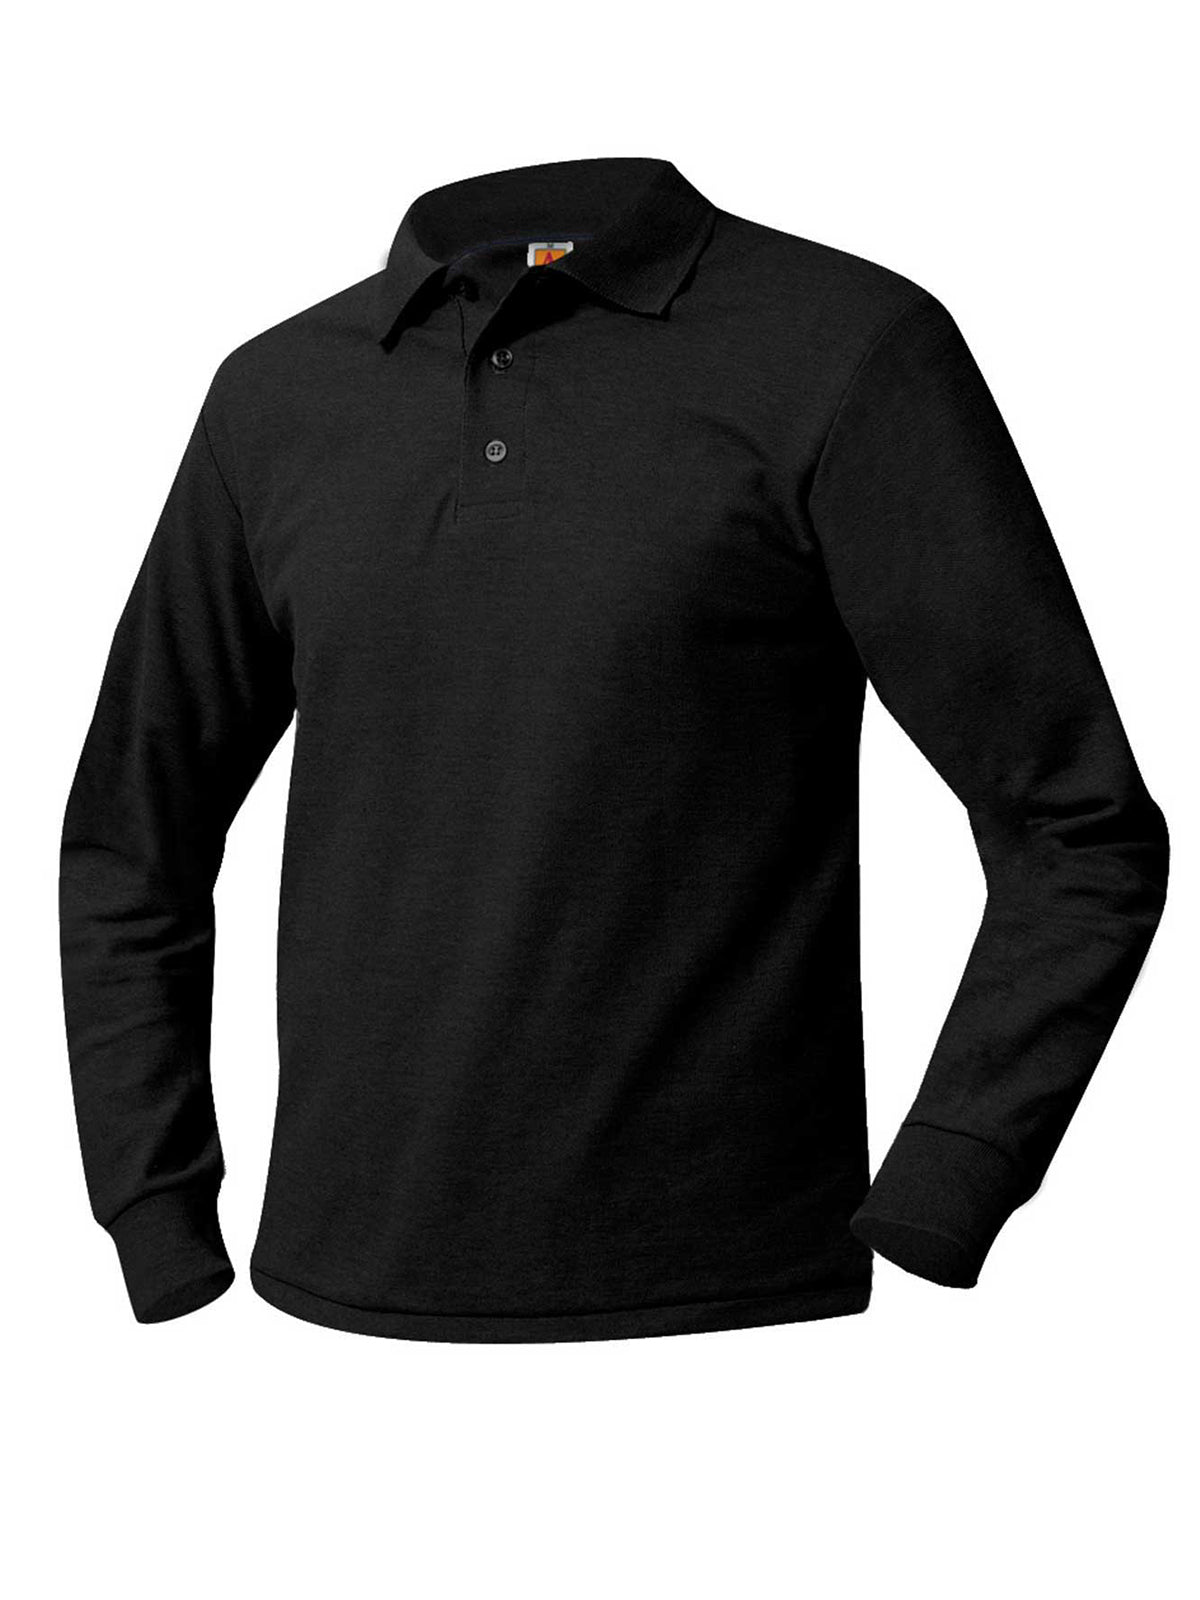 Unisex Long Sleeve Knit Shirt - 8766 - Black